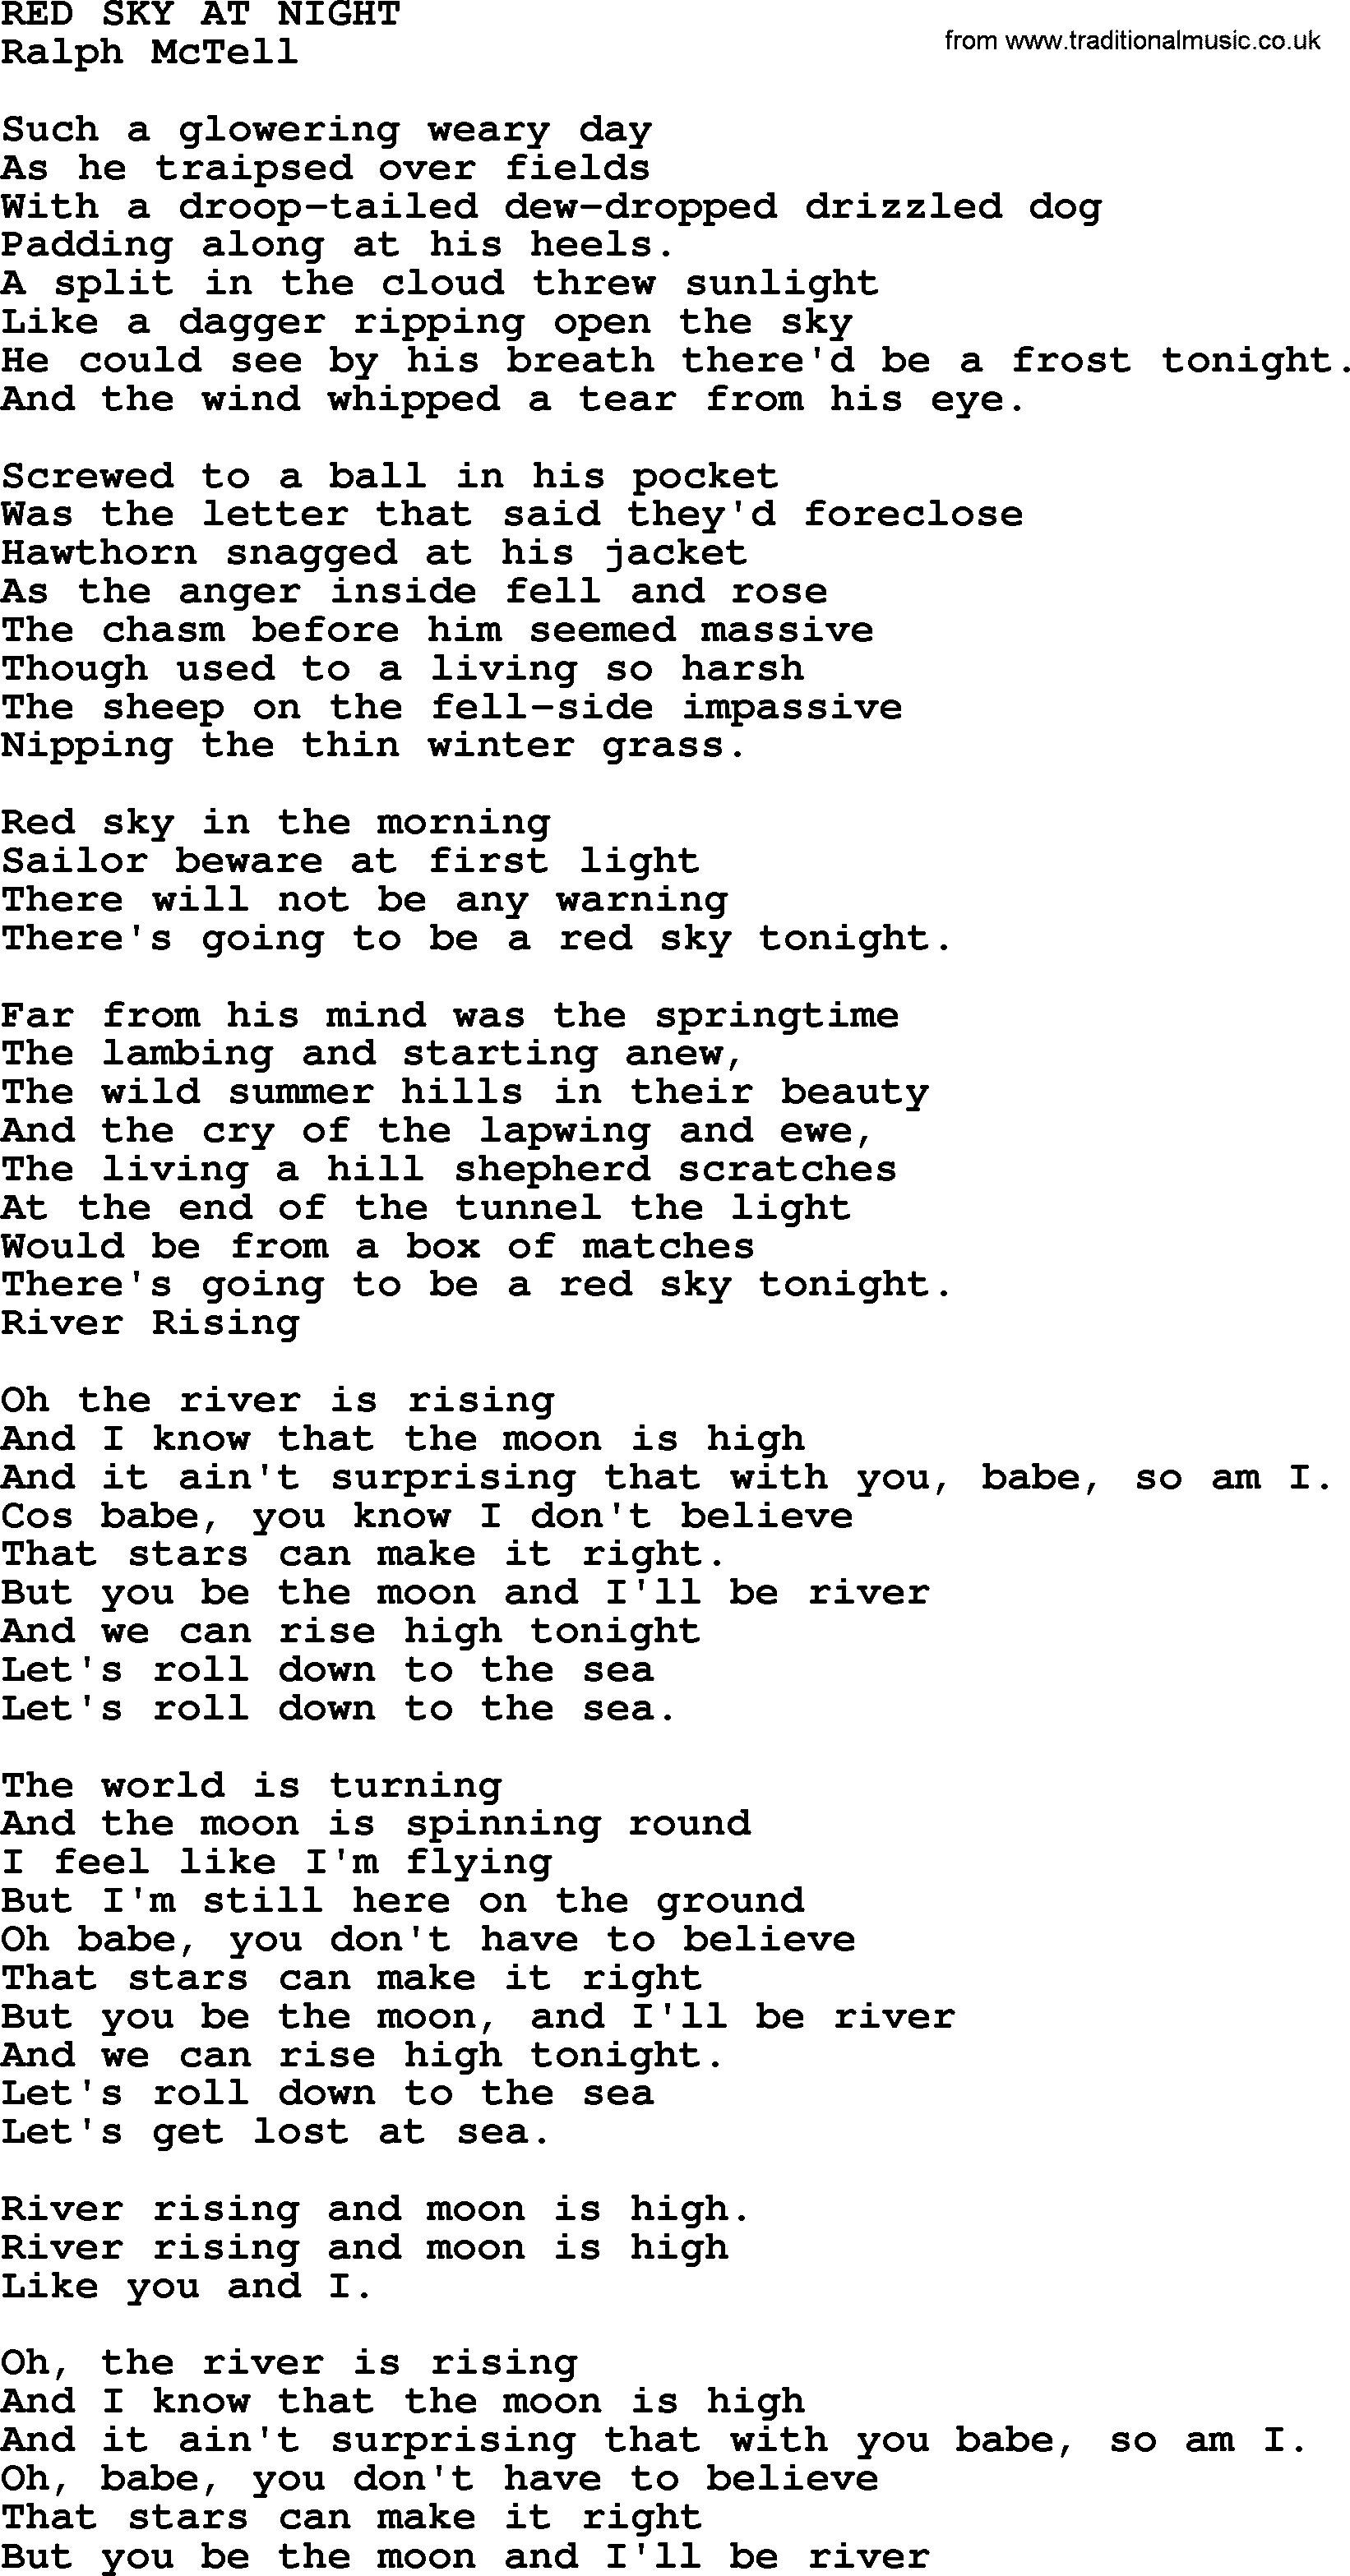 Ralph McTell Song: Red Sky At Night, lyrics